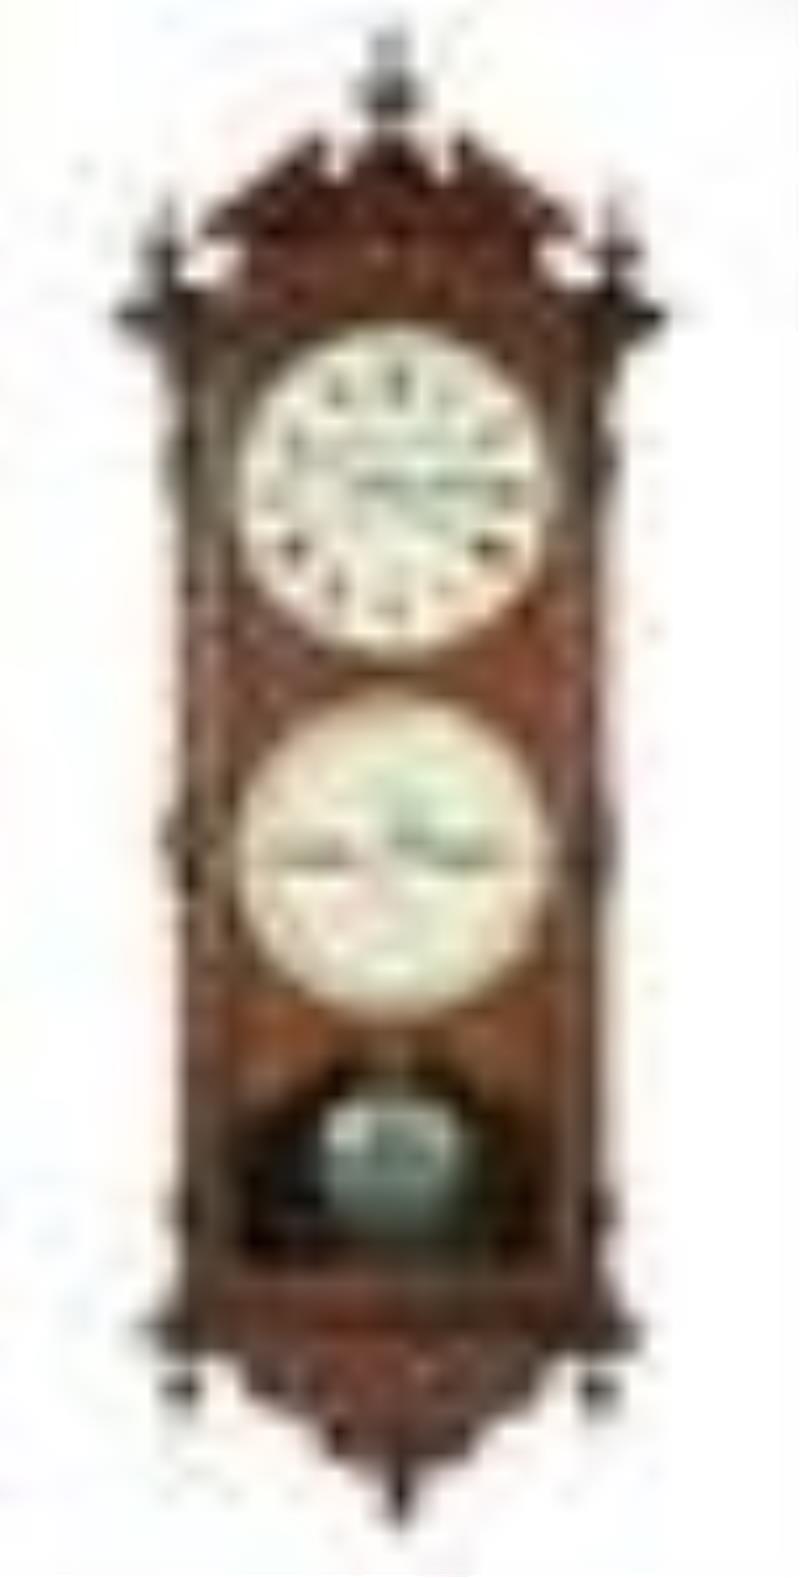 Ithaca 2 Regulator Calendar Clock Price Guide